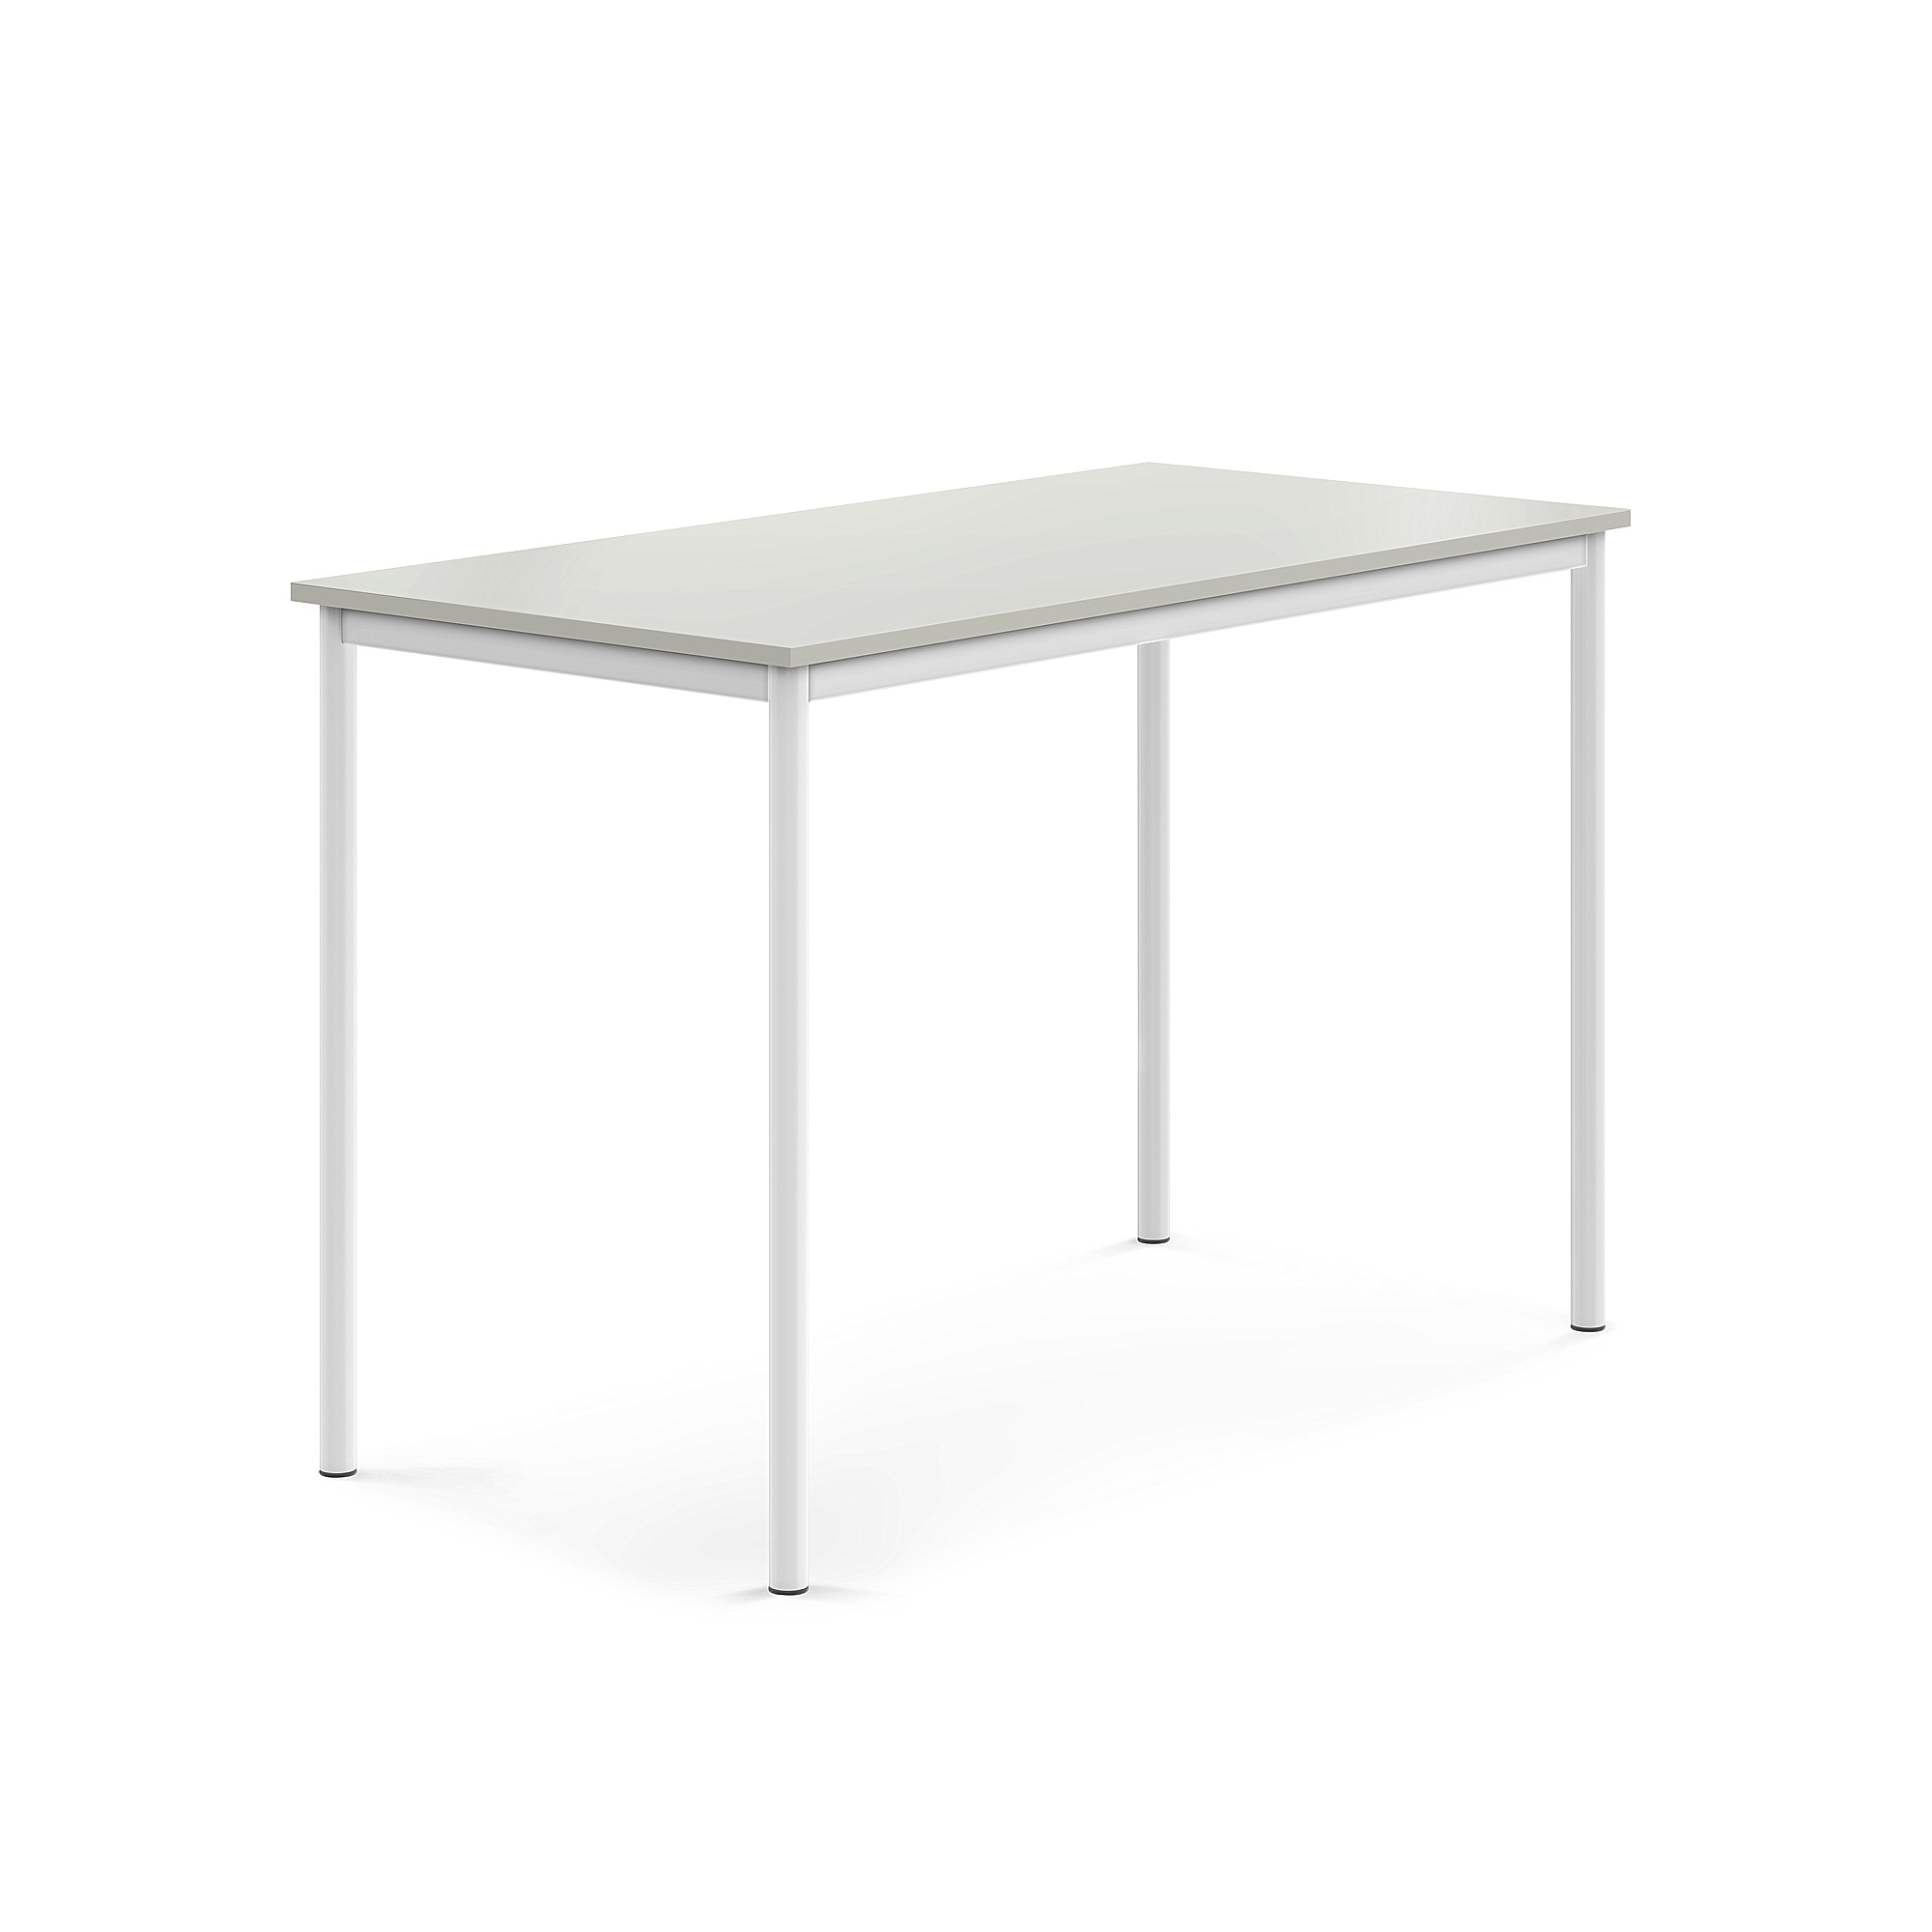 Stůl SONITUS, 1400x700x900 mm, bílé nohy, HPL deska tlumící hluk, šedá